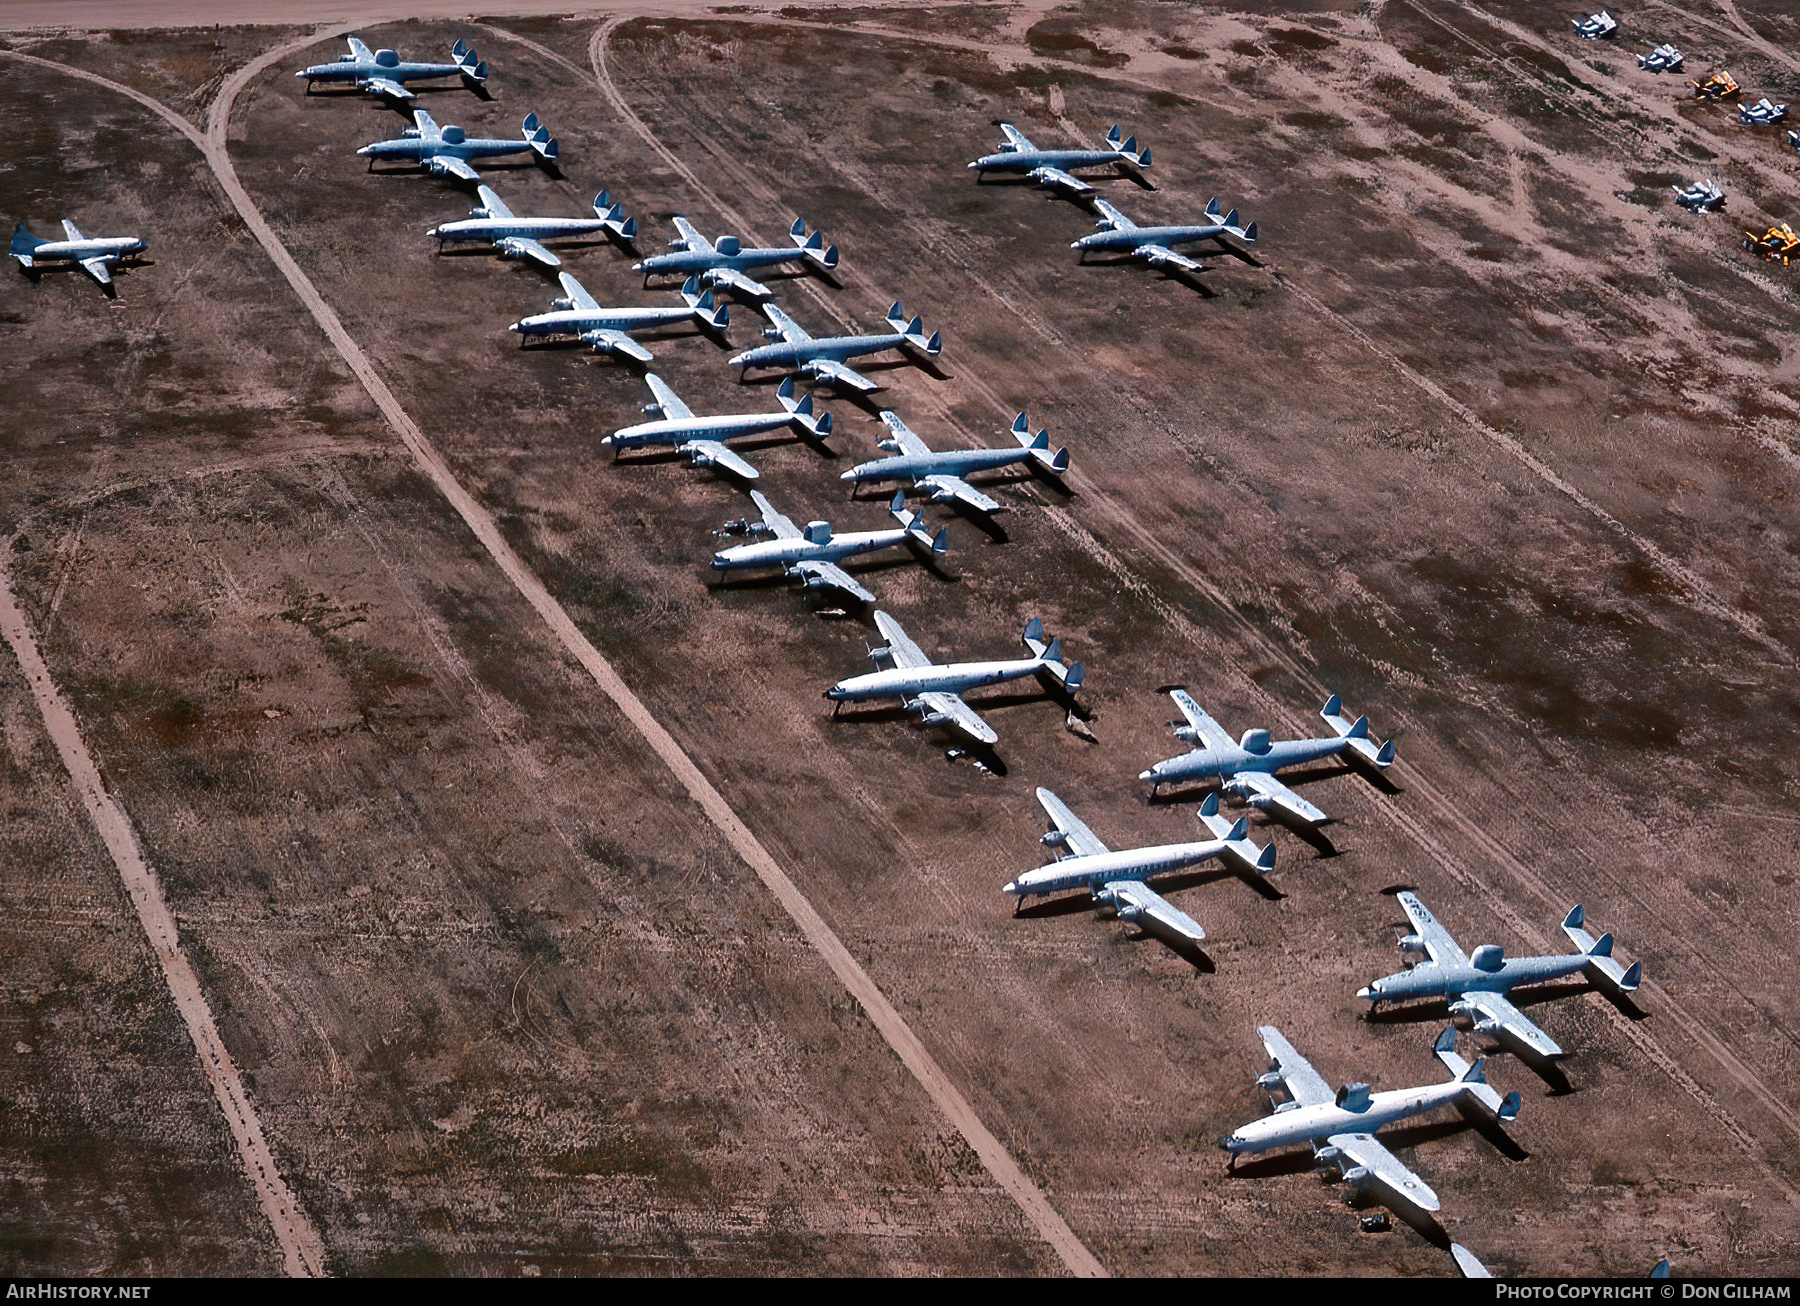 Airport photo of Tucson - Davis-Monthan AFB (KDMA / DMA) in Arizona, United States | AirHistory.net #305416